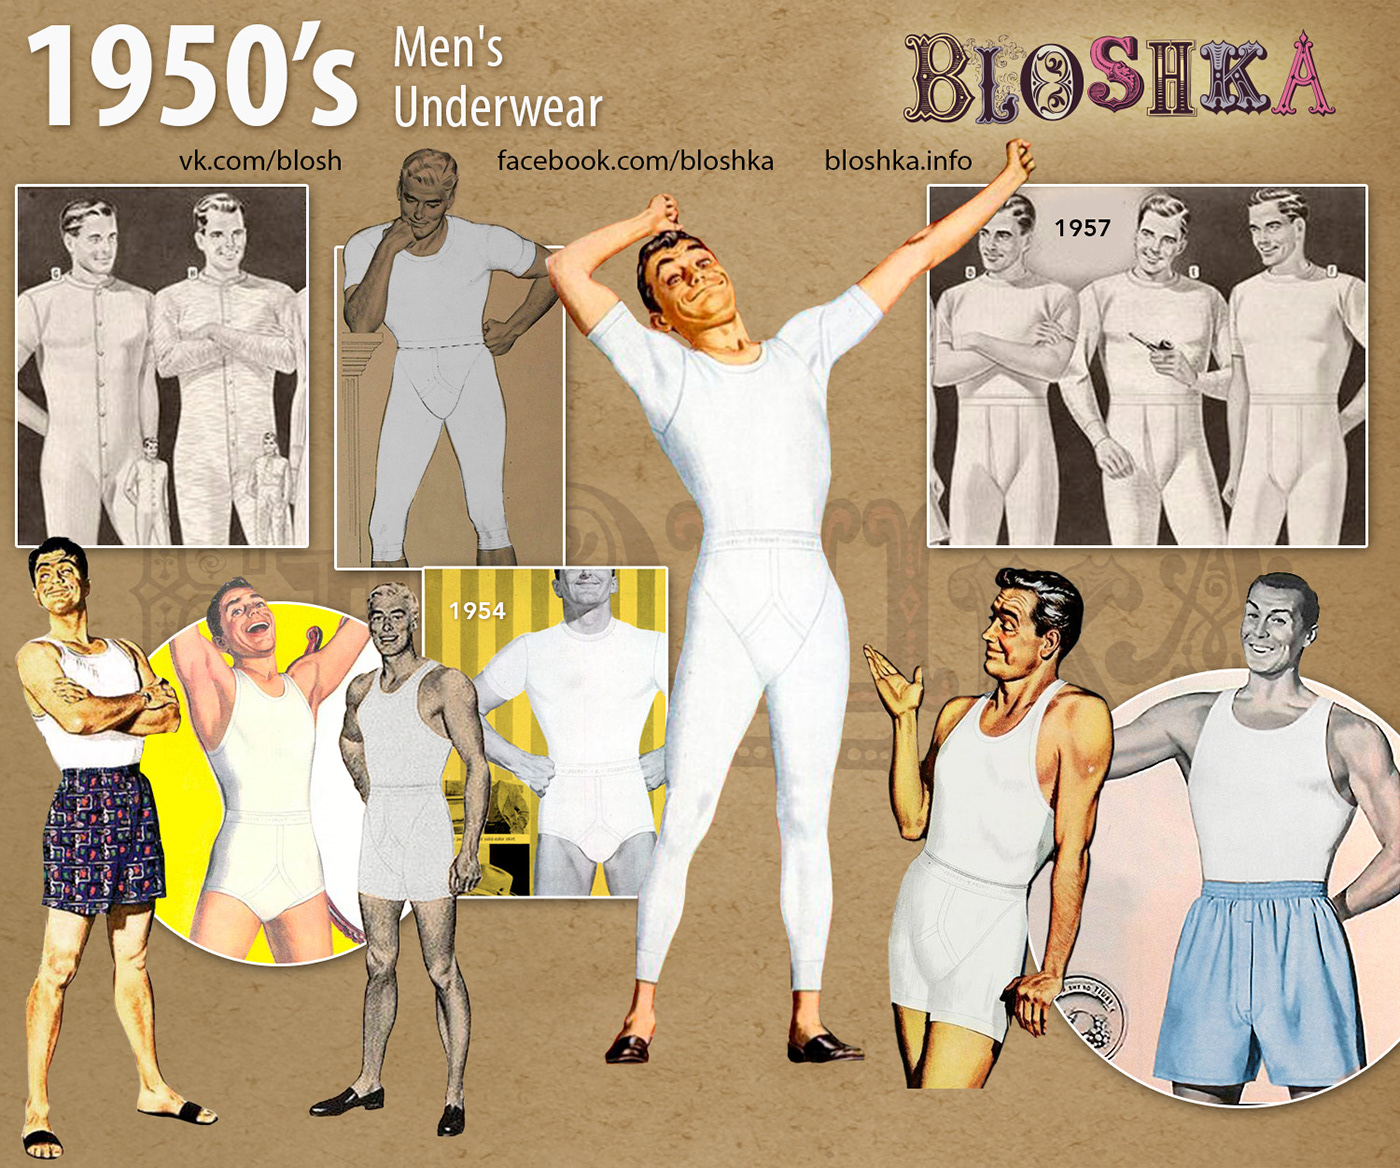 1950's history fashion Fashion 